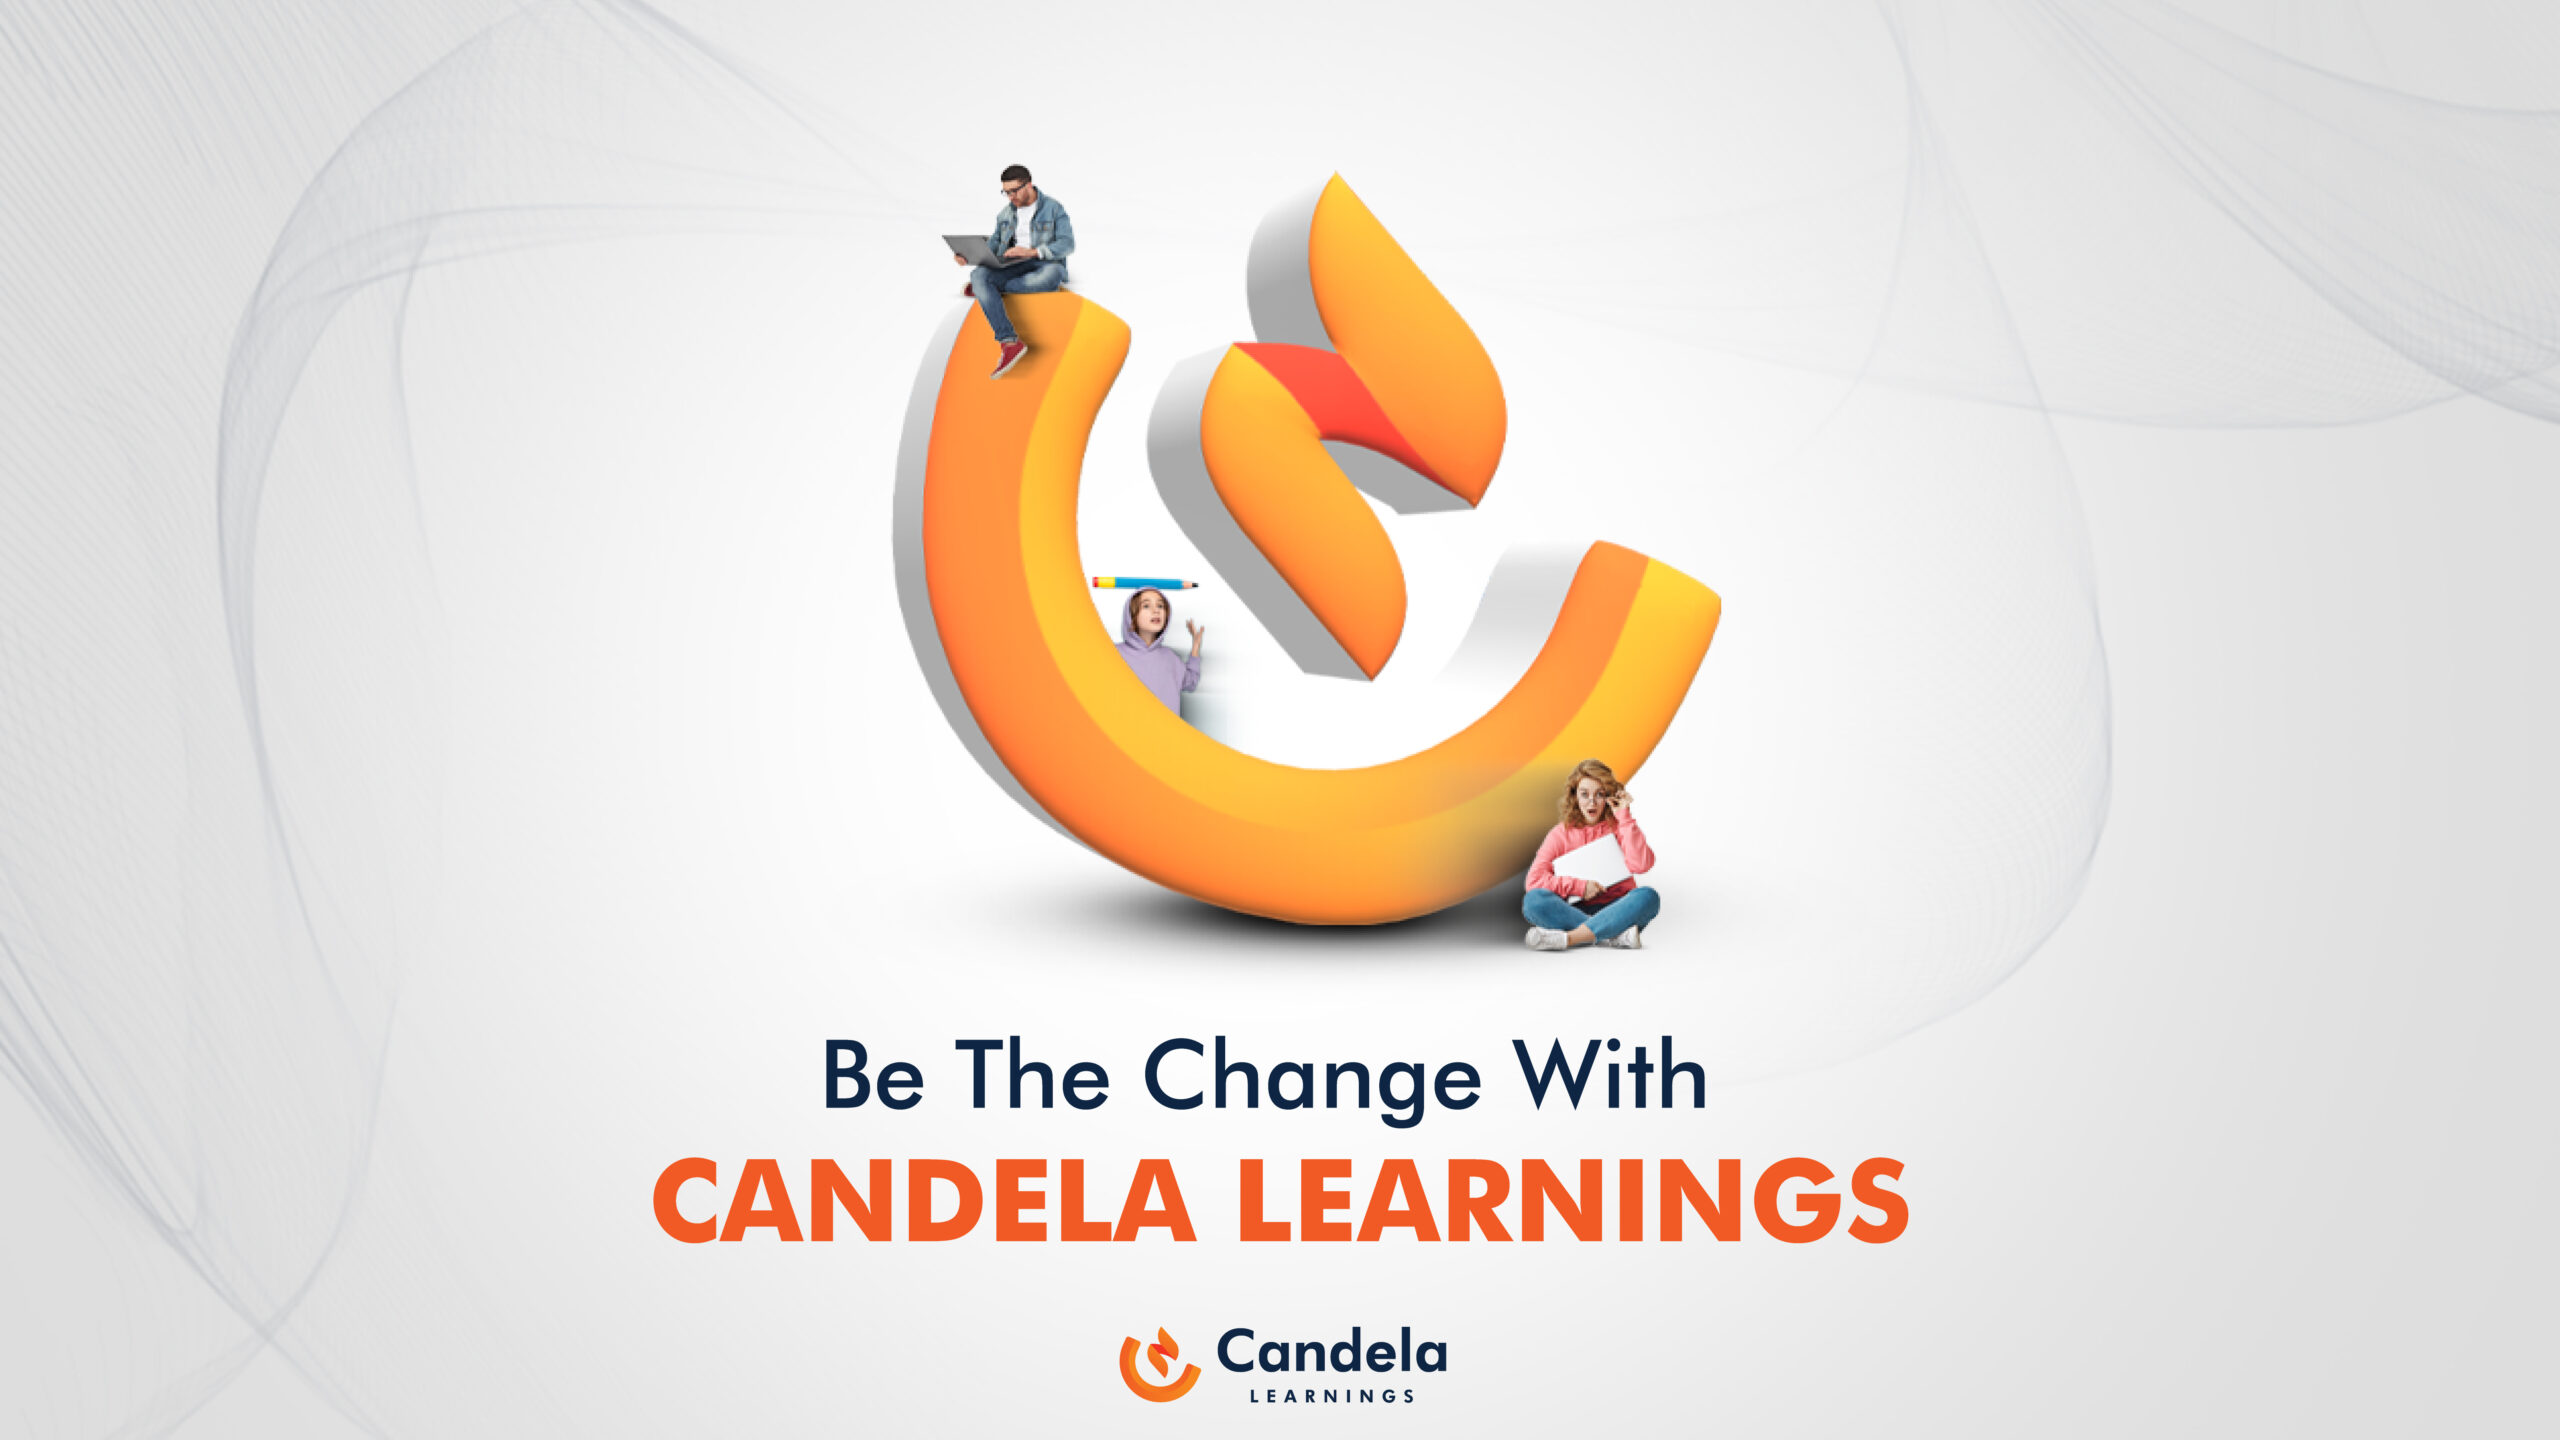 candela learnings, online education, online learning, e learning, candela, candles, experiential learning,